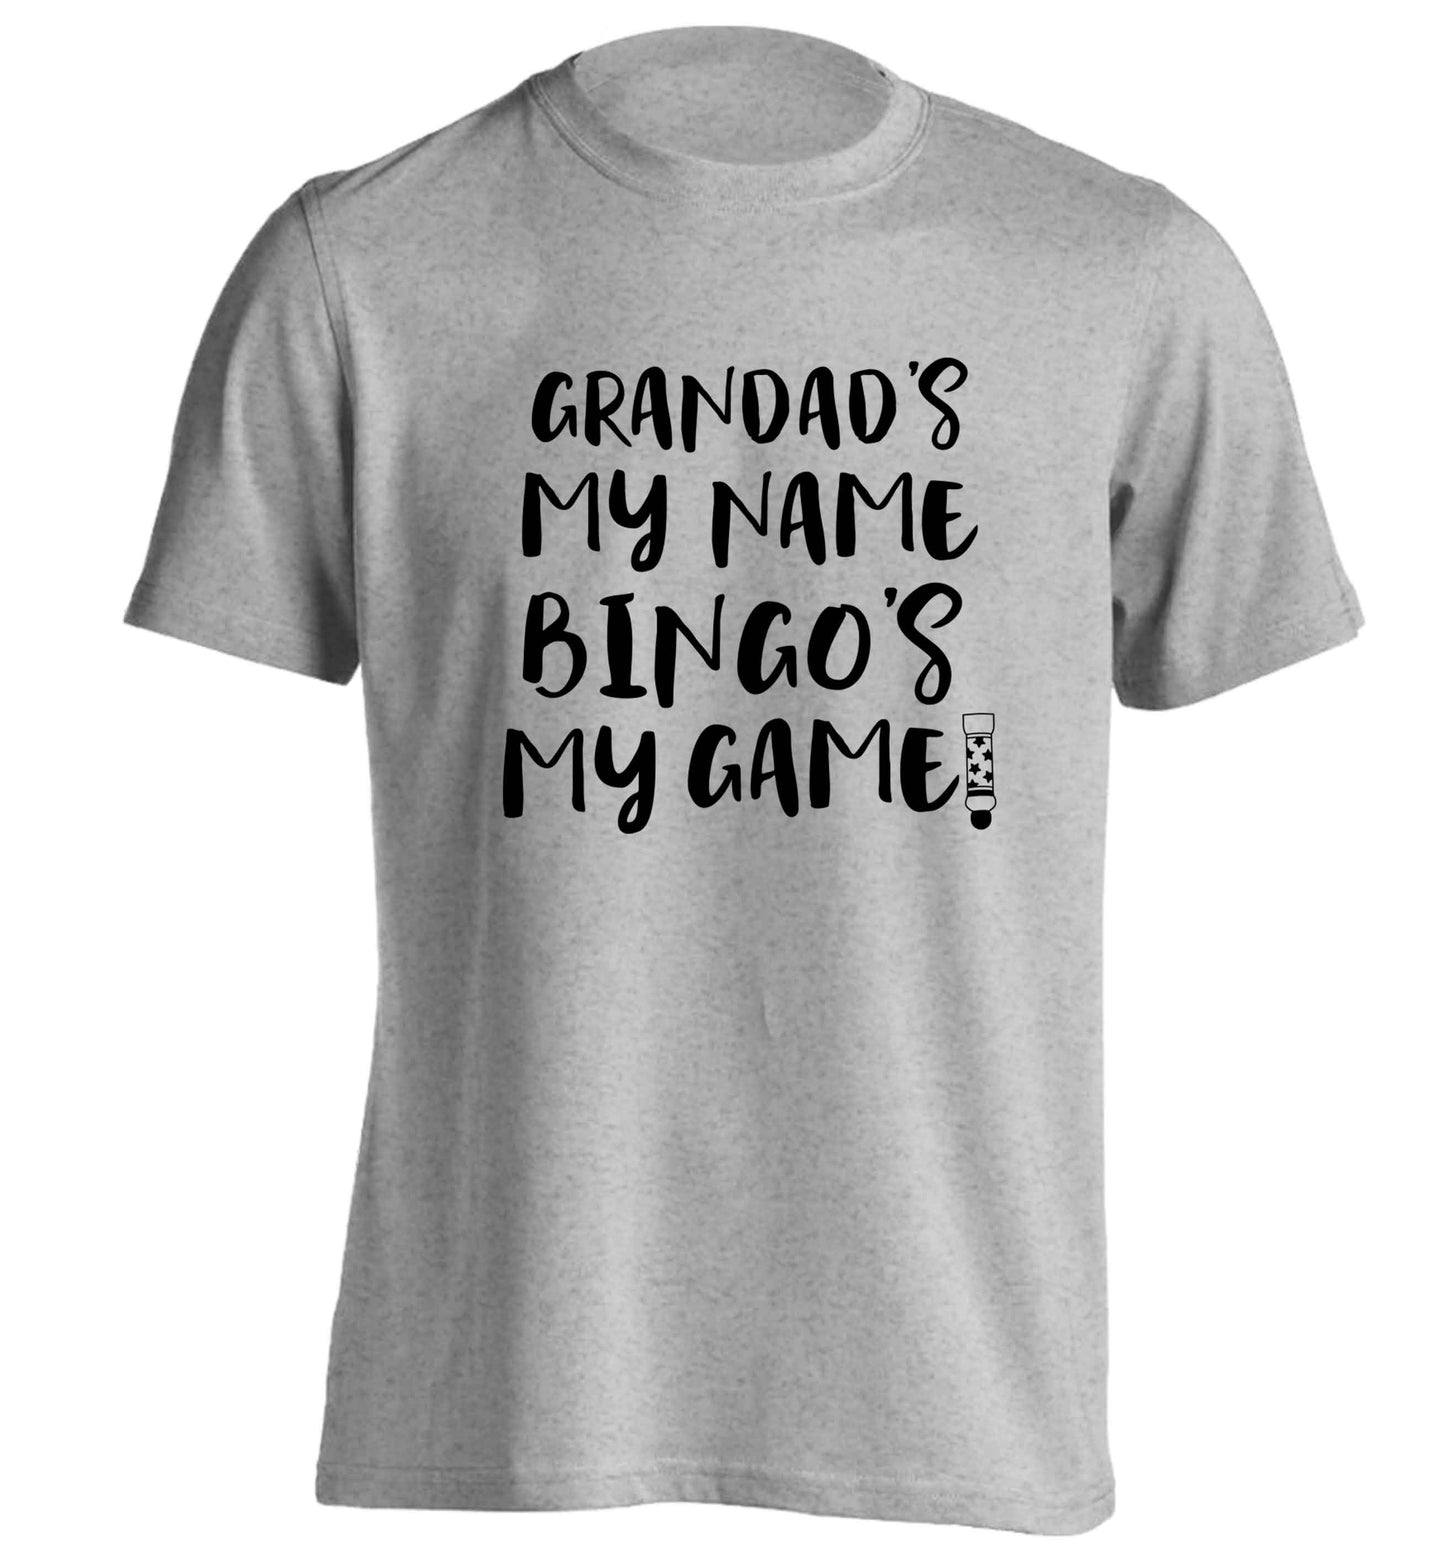 Grandad's my name bingo's my game! adults unisex grey Tshirt 2XL